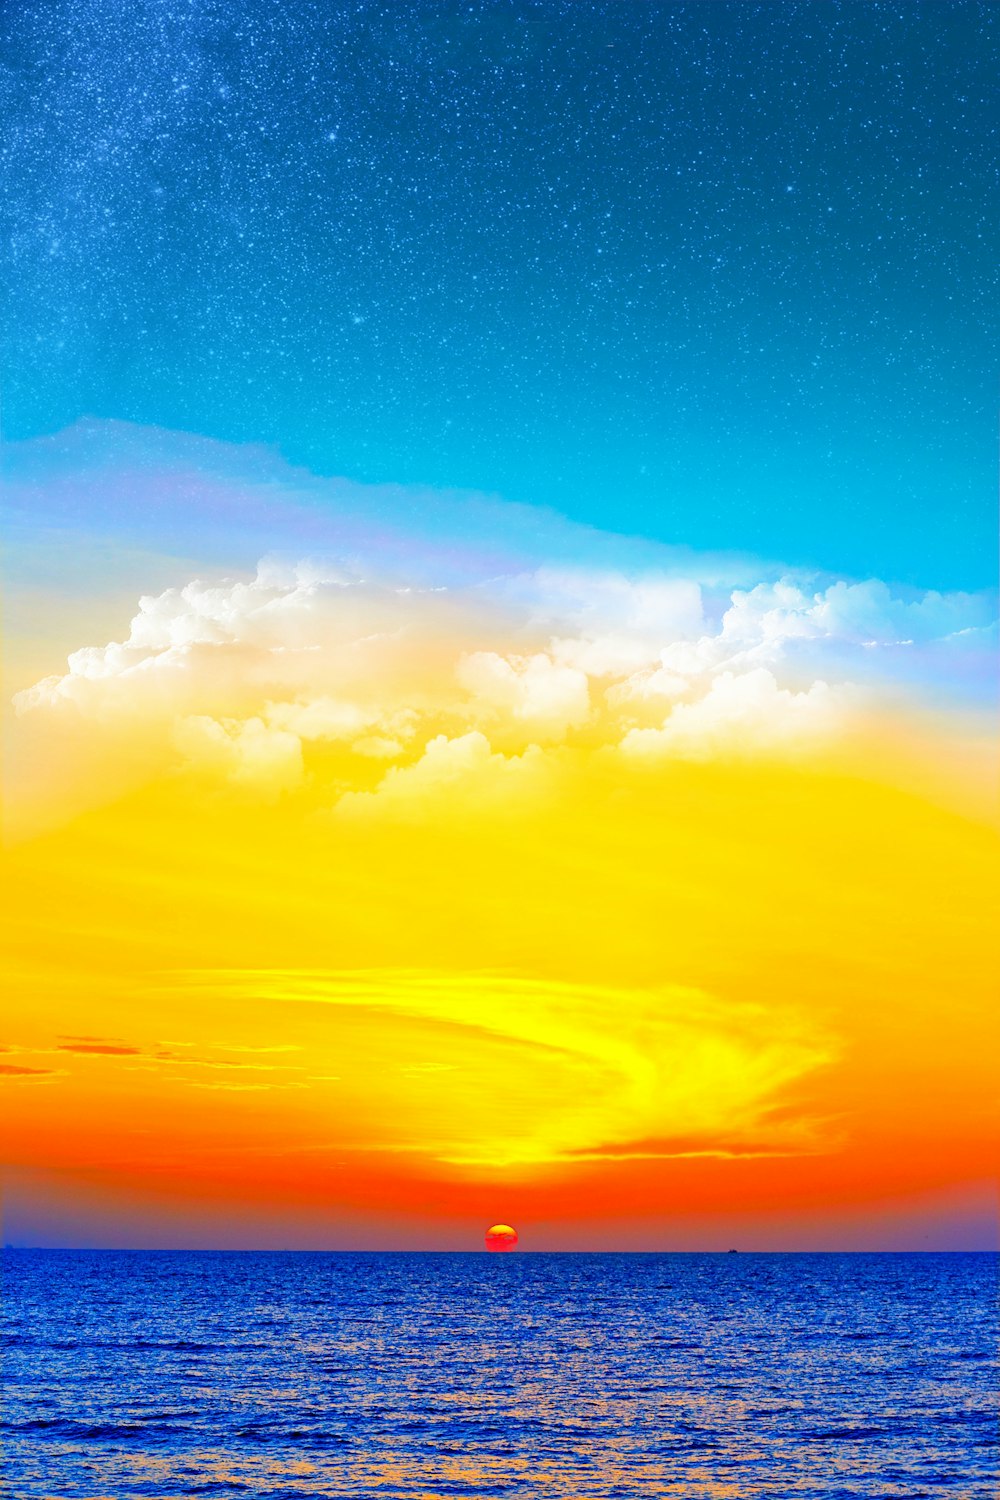 blue sea under blue, white, and orange sky during sunset digital wallpaper